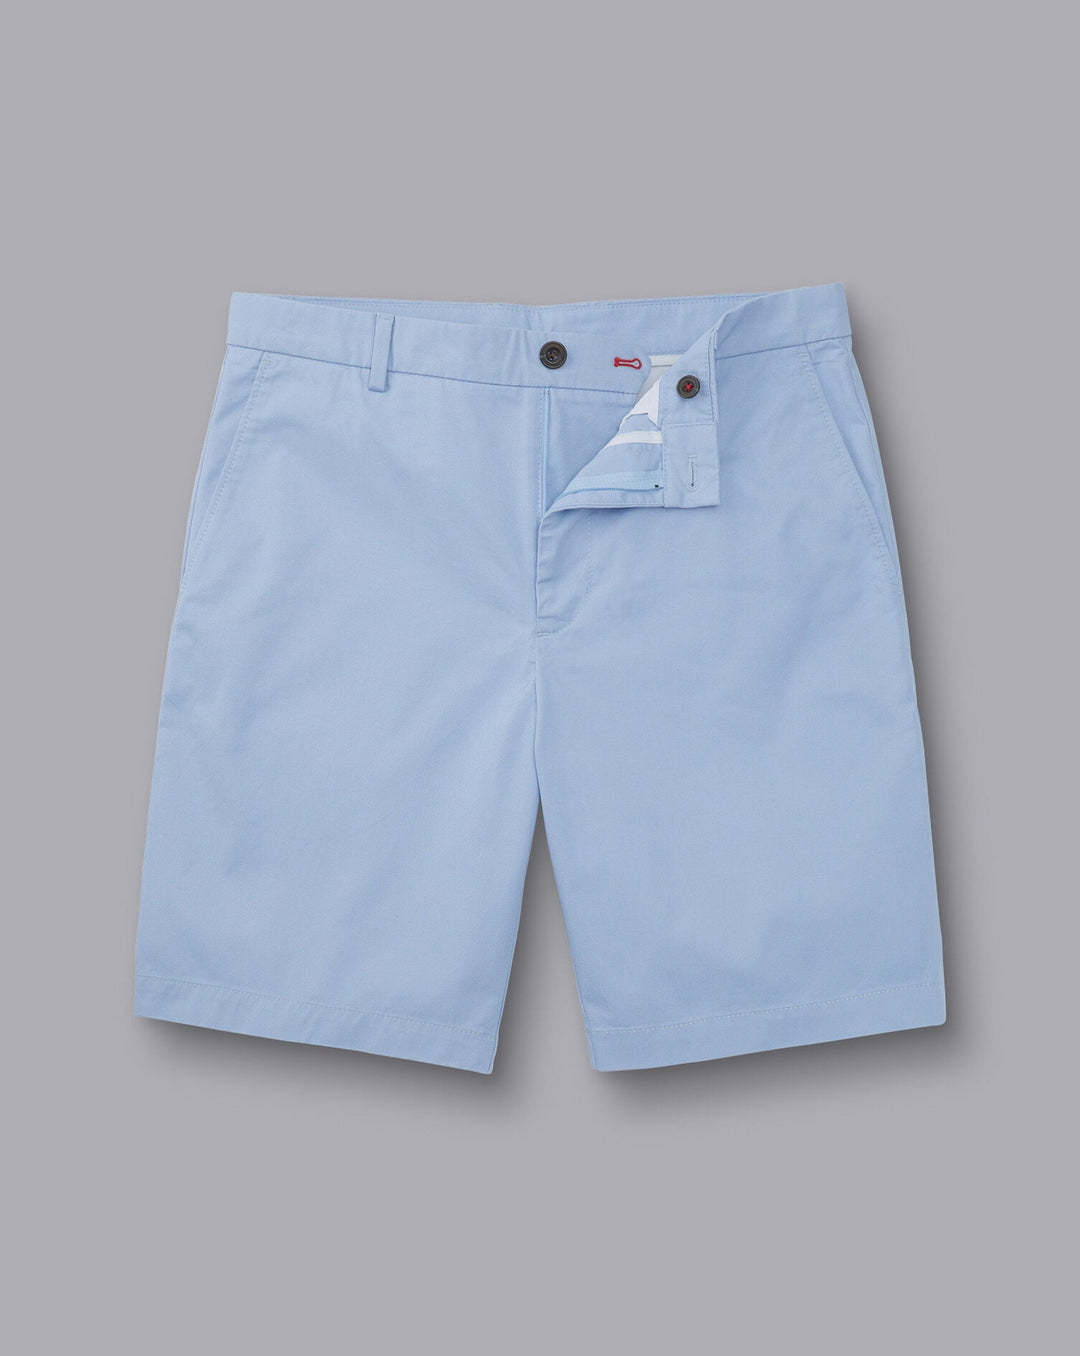 Charles Tyrwhitt Cornflower Blue Cotton Short